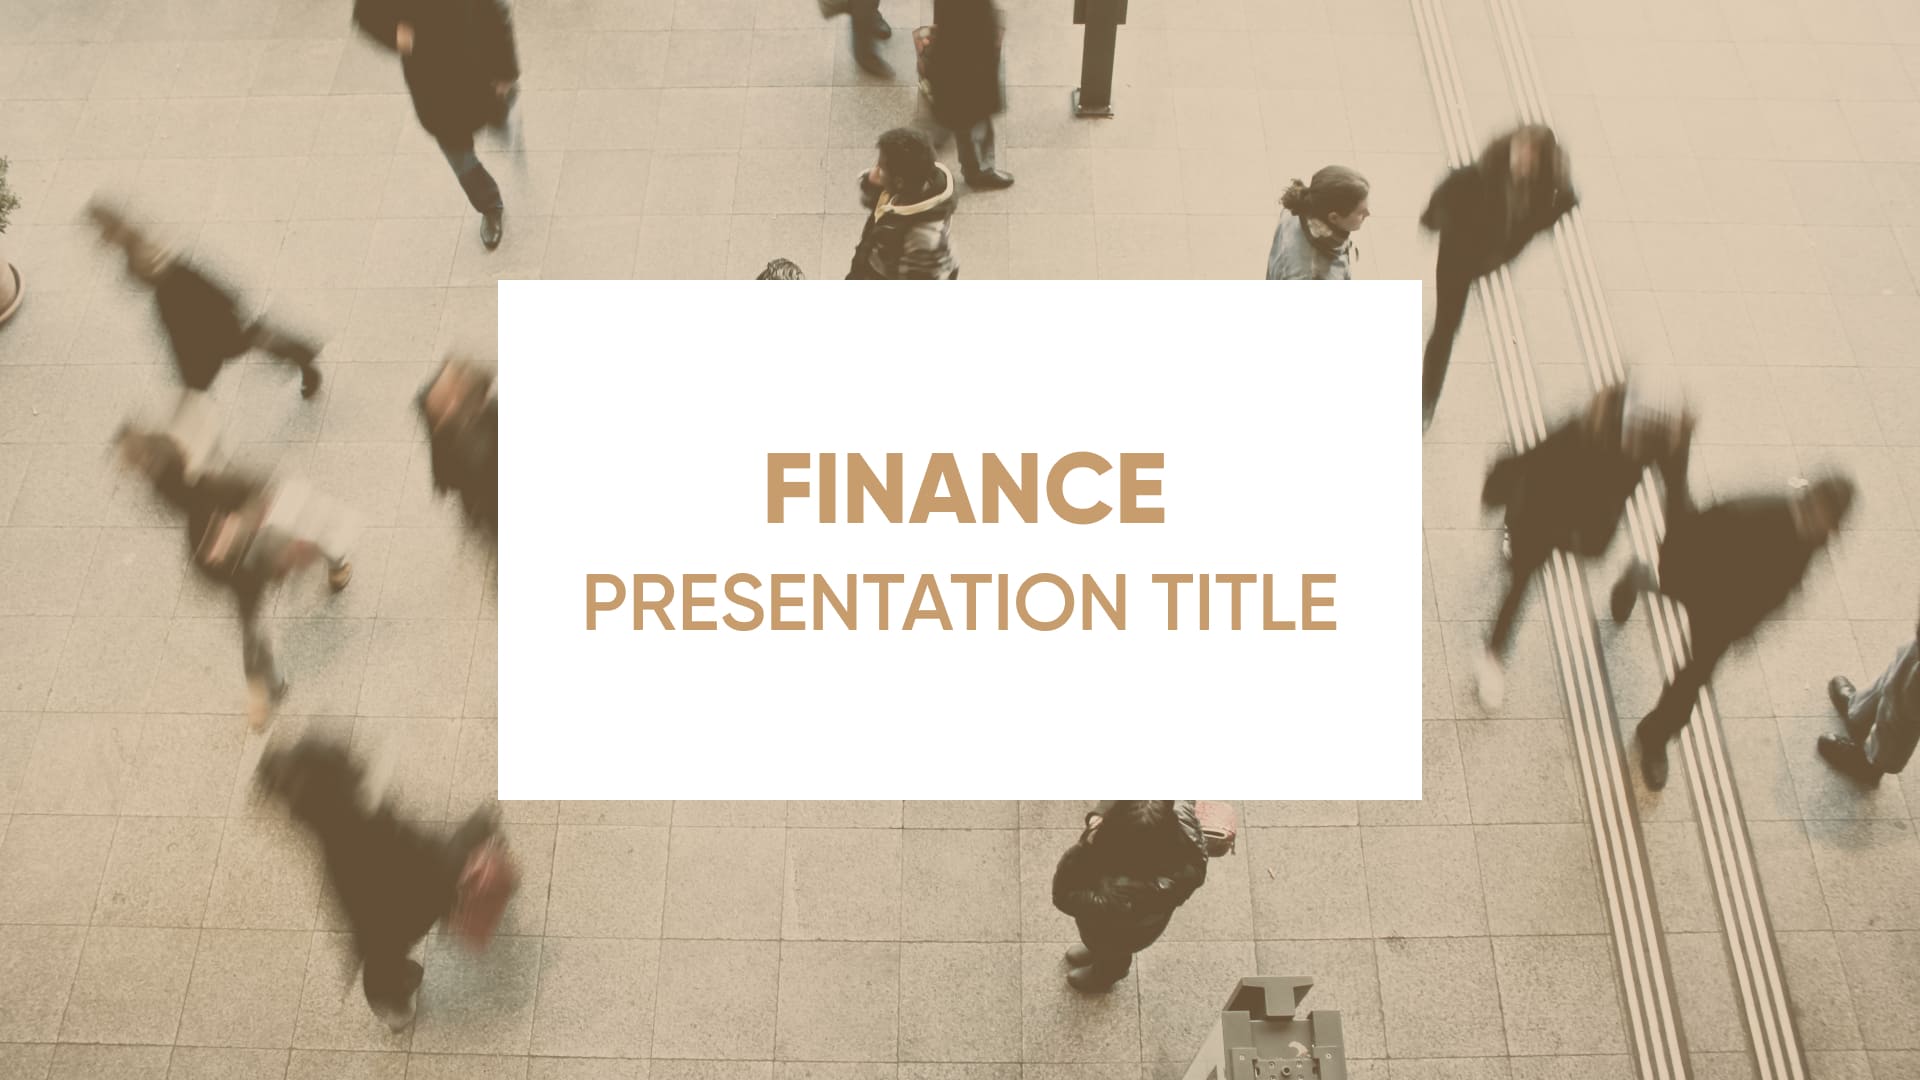 1 Finance Presentation PPT Free Download.